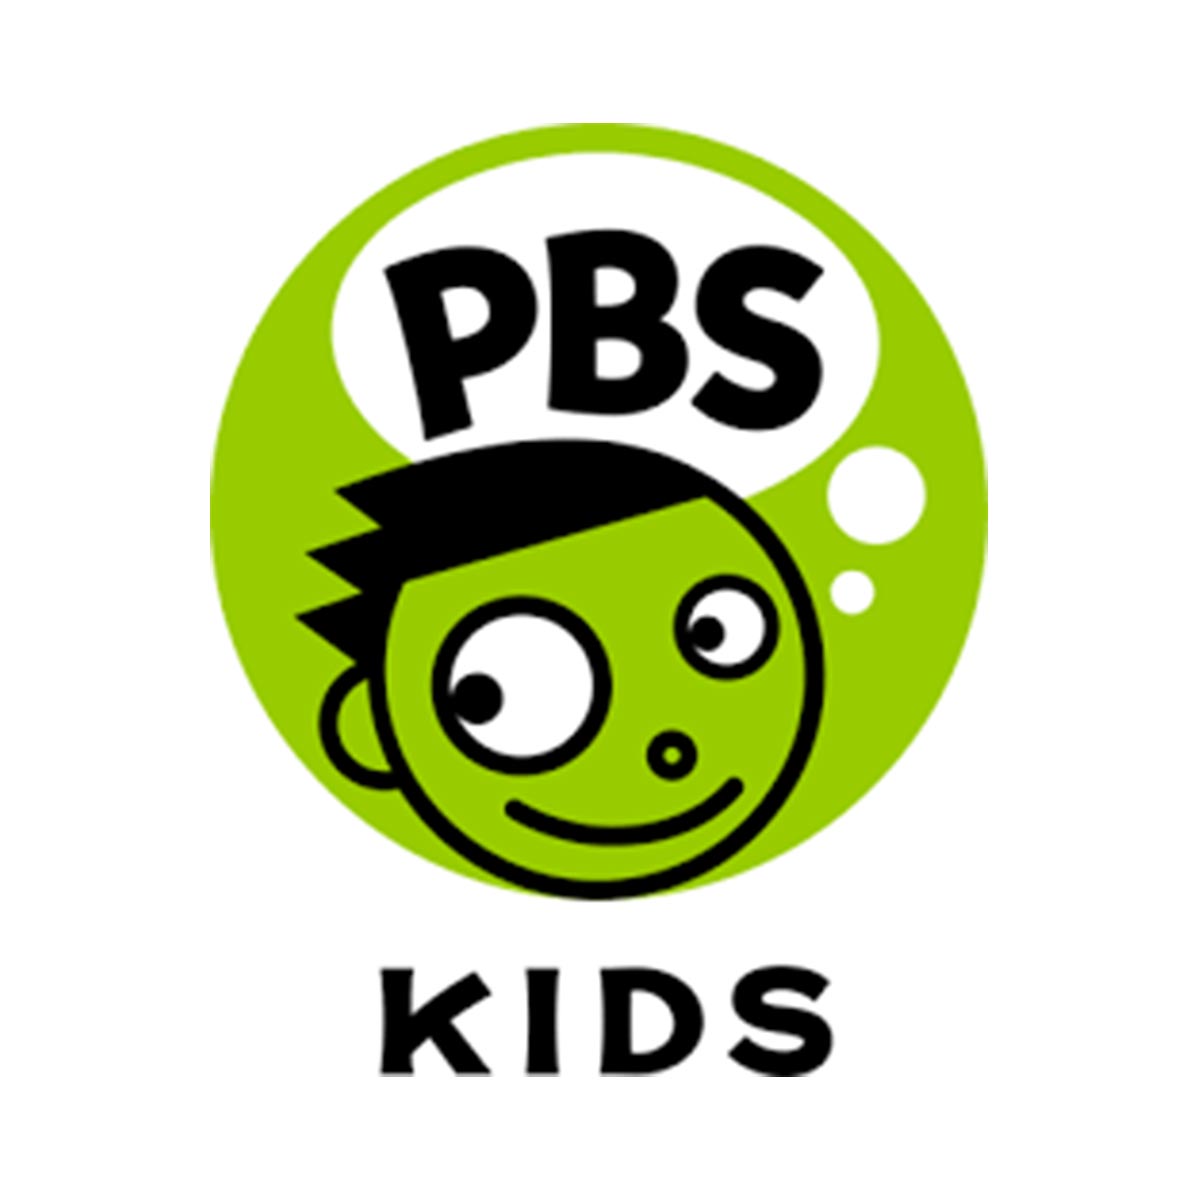 pbs kids sesame street logo